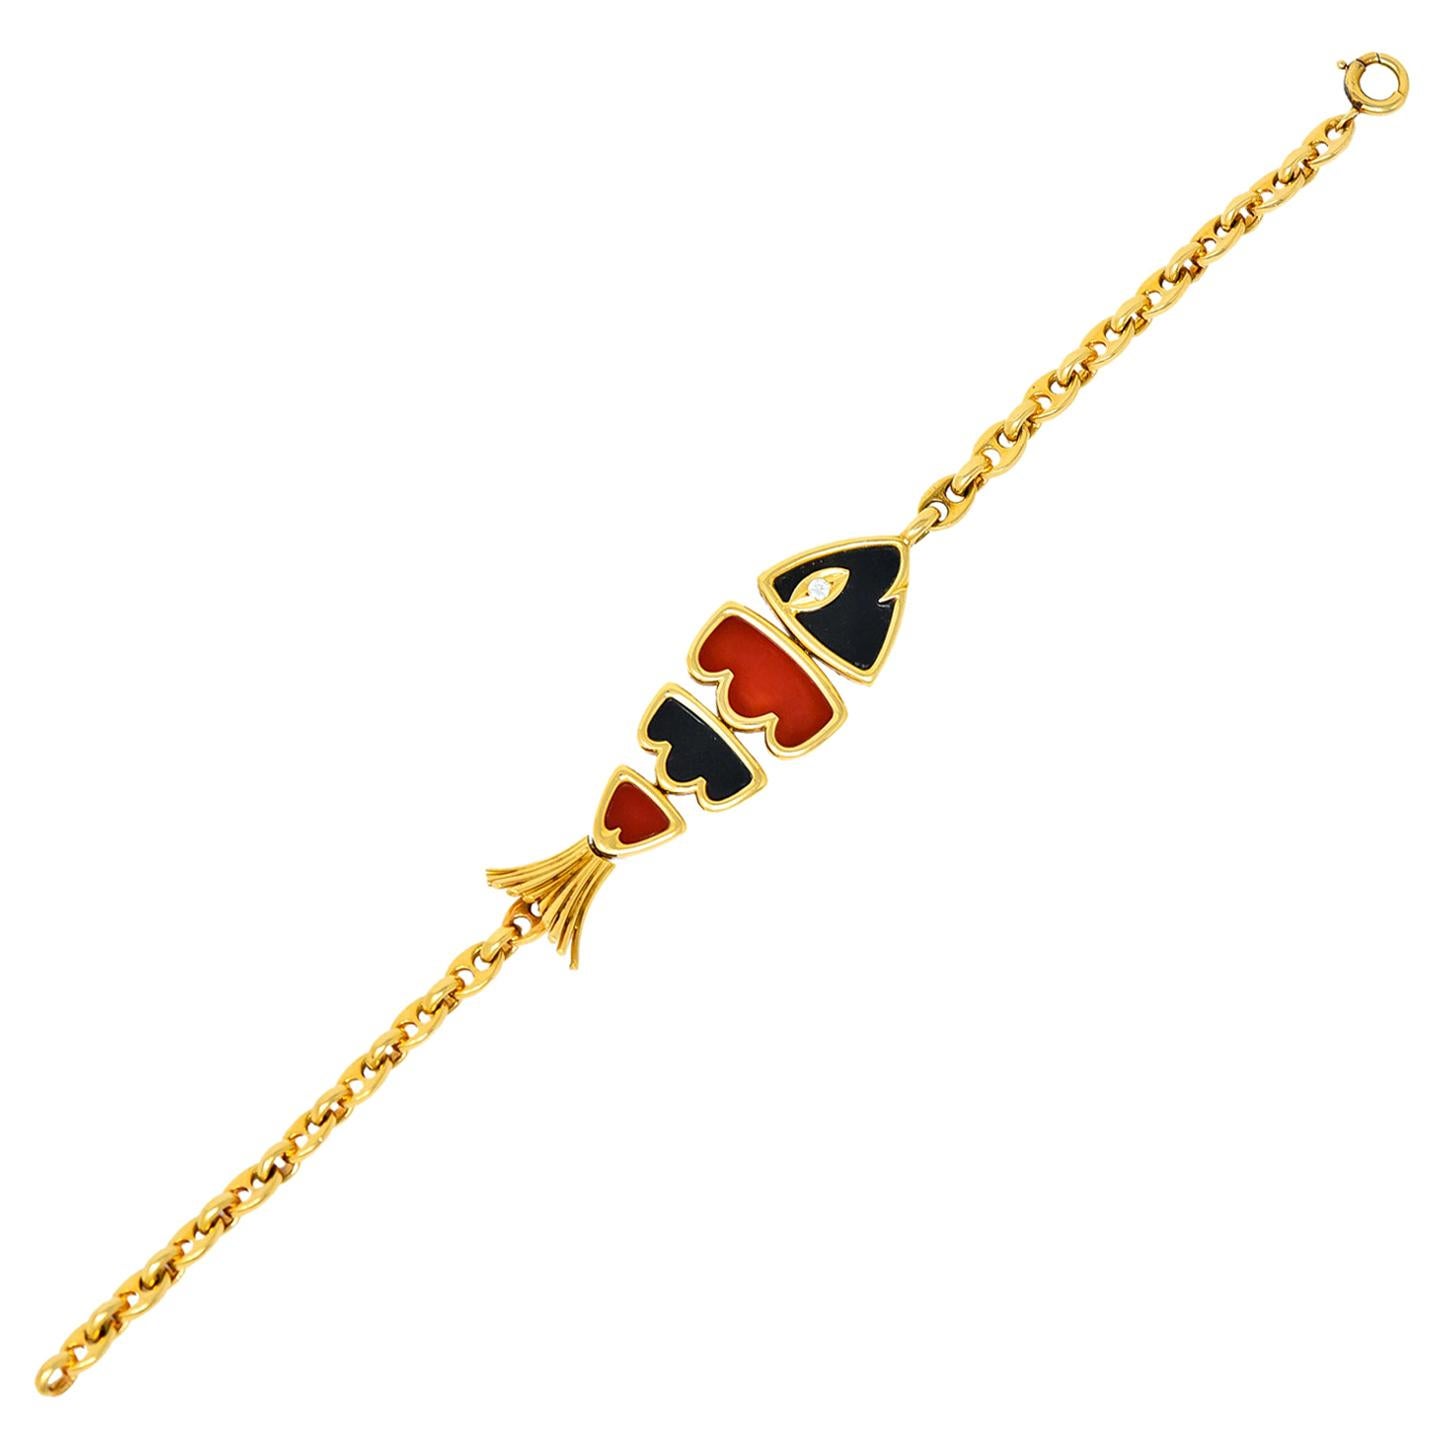 Van Cleef & Arpels Coral Black Onyx 18 Karat Gold Articulated Fish Bracelet